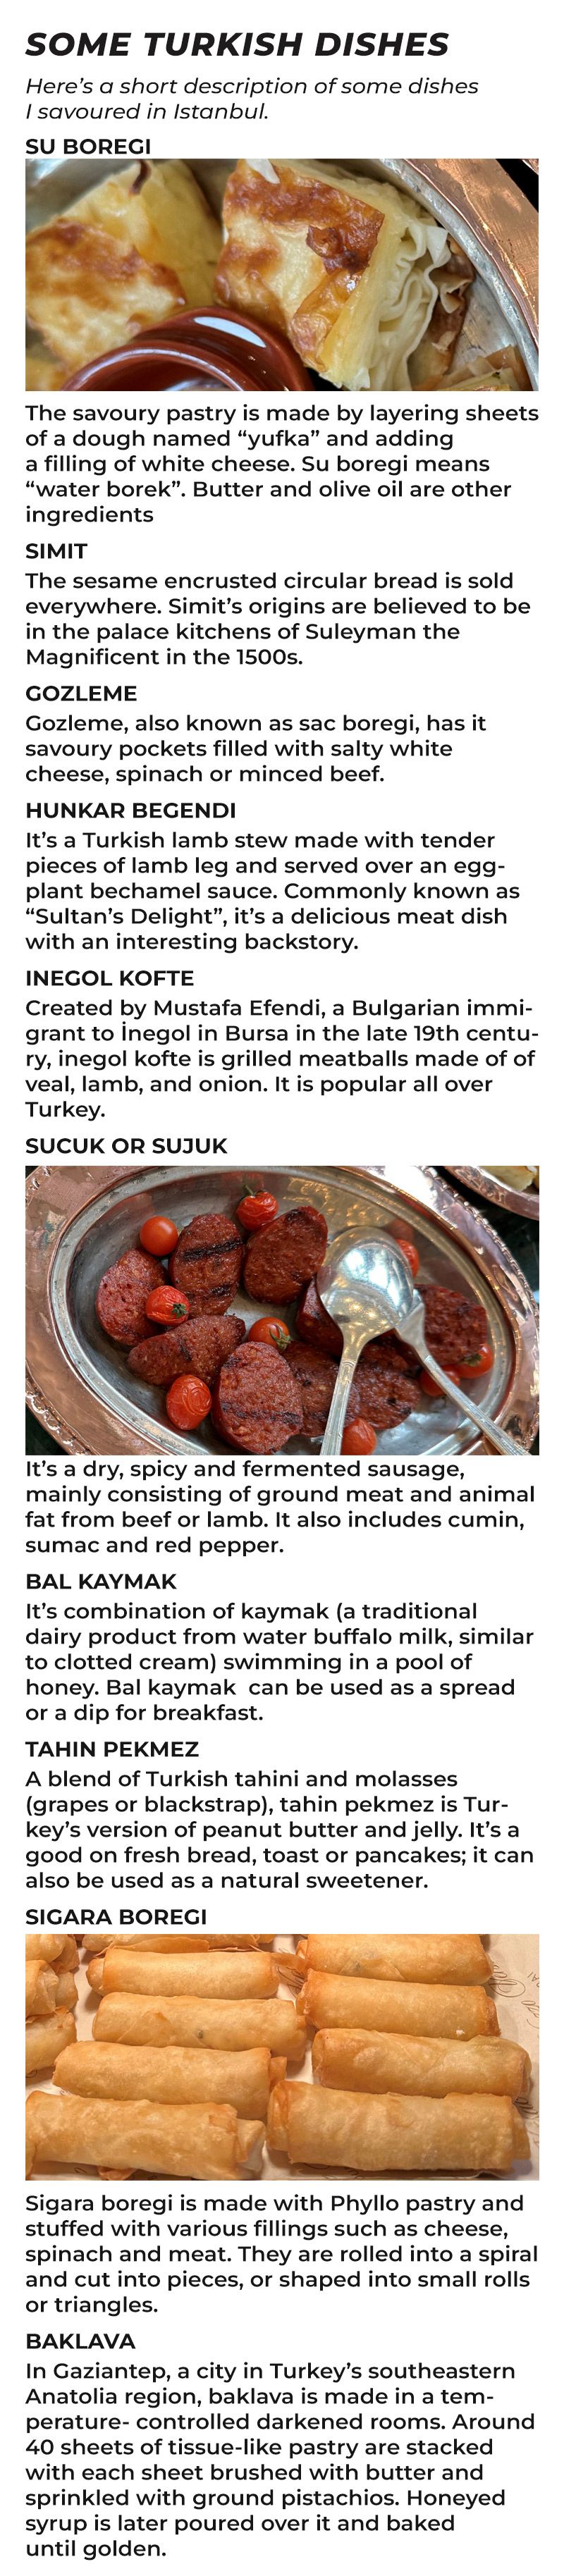 Turkish dishes Box